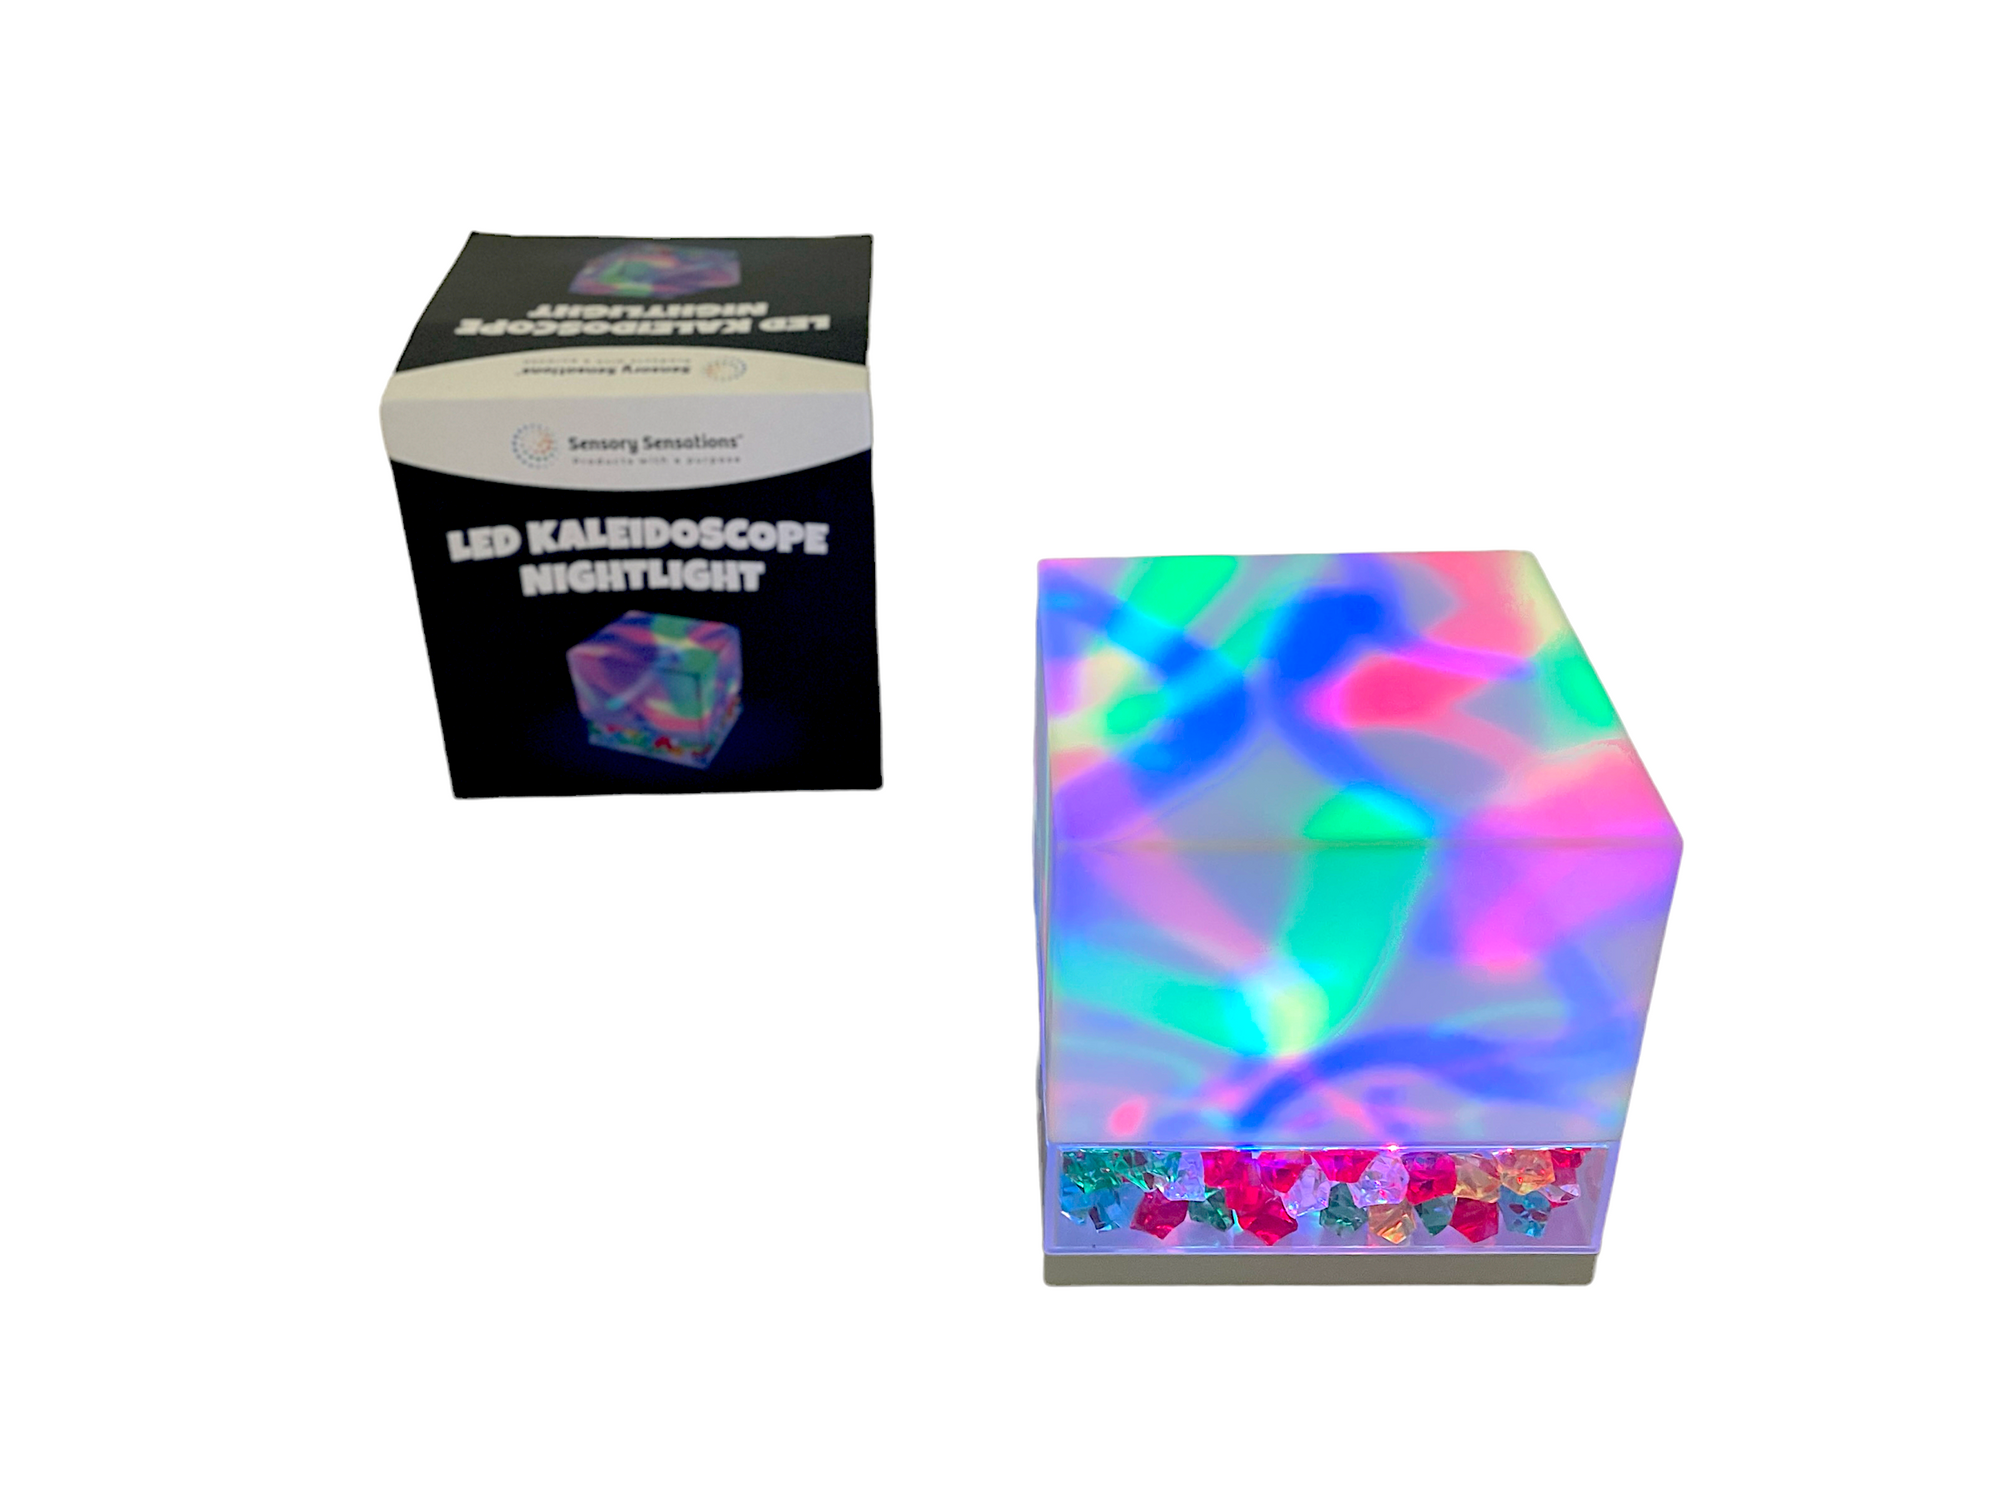 the Sensory Sensations LED Kaleidoscope Nightlight on display in front of it's black box